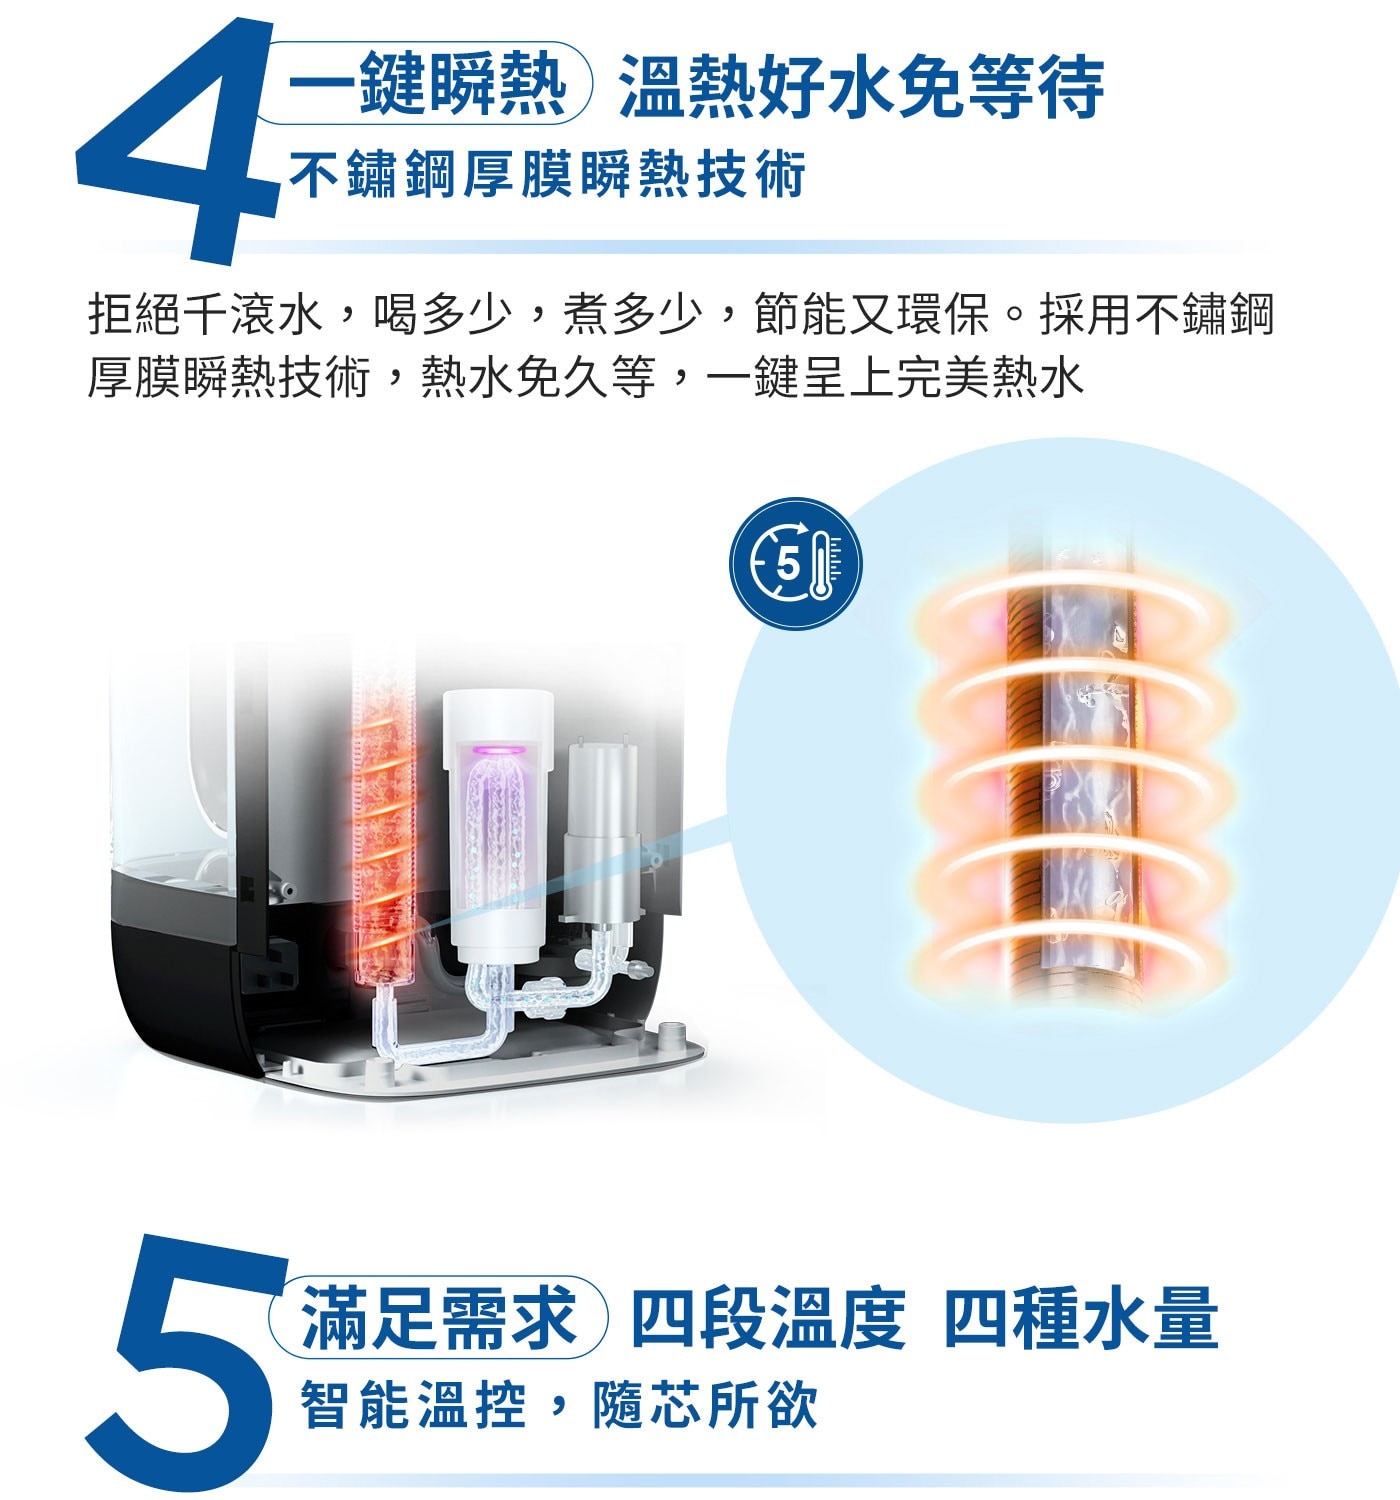 Brita Model ONE瞬熱智能溫控UVC滅菌開飲機五秒瞬熱， UVC 滅菌系統，四段智能溫控，四段水量可選擇，內含一顆 Maxtra+ 濾芯。